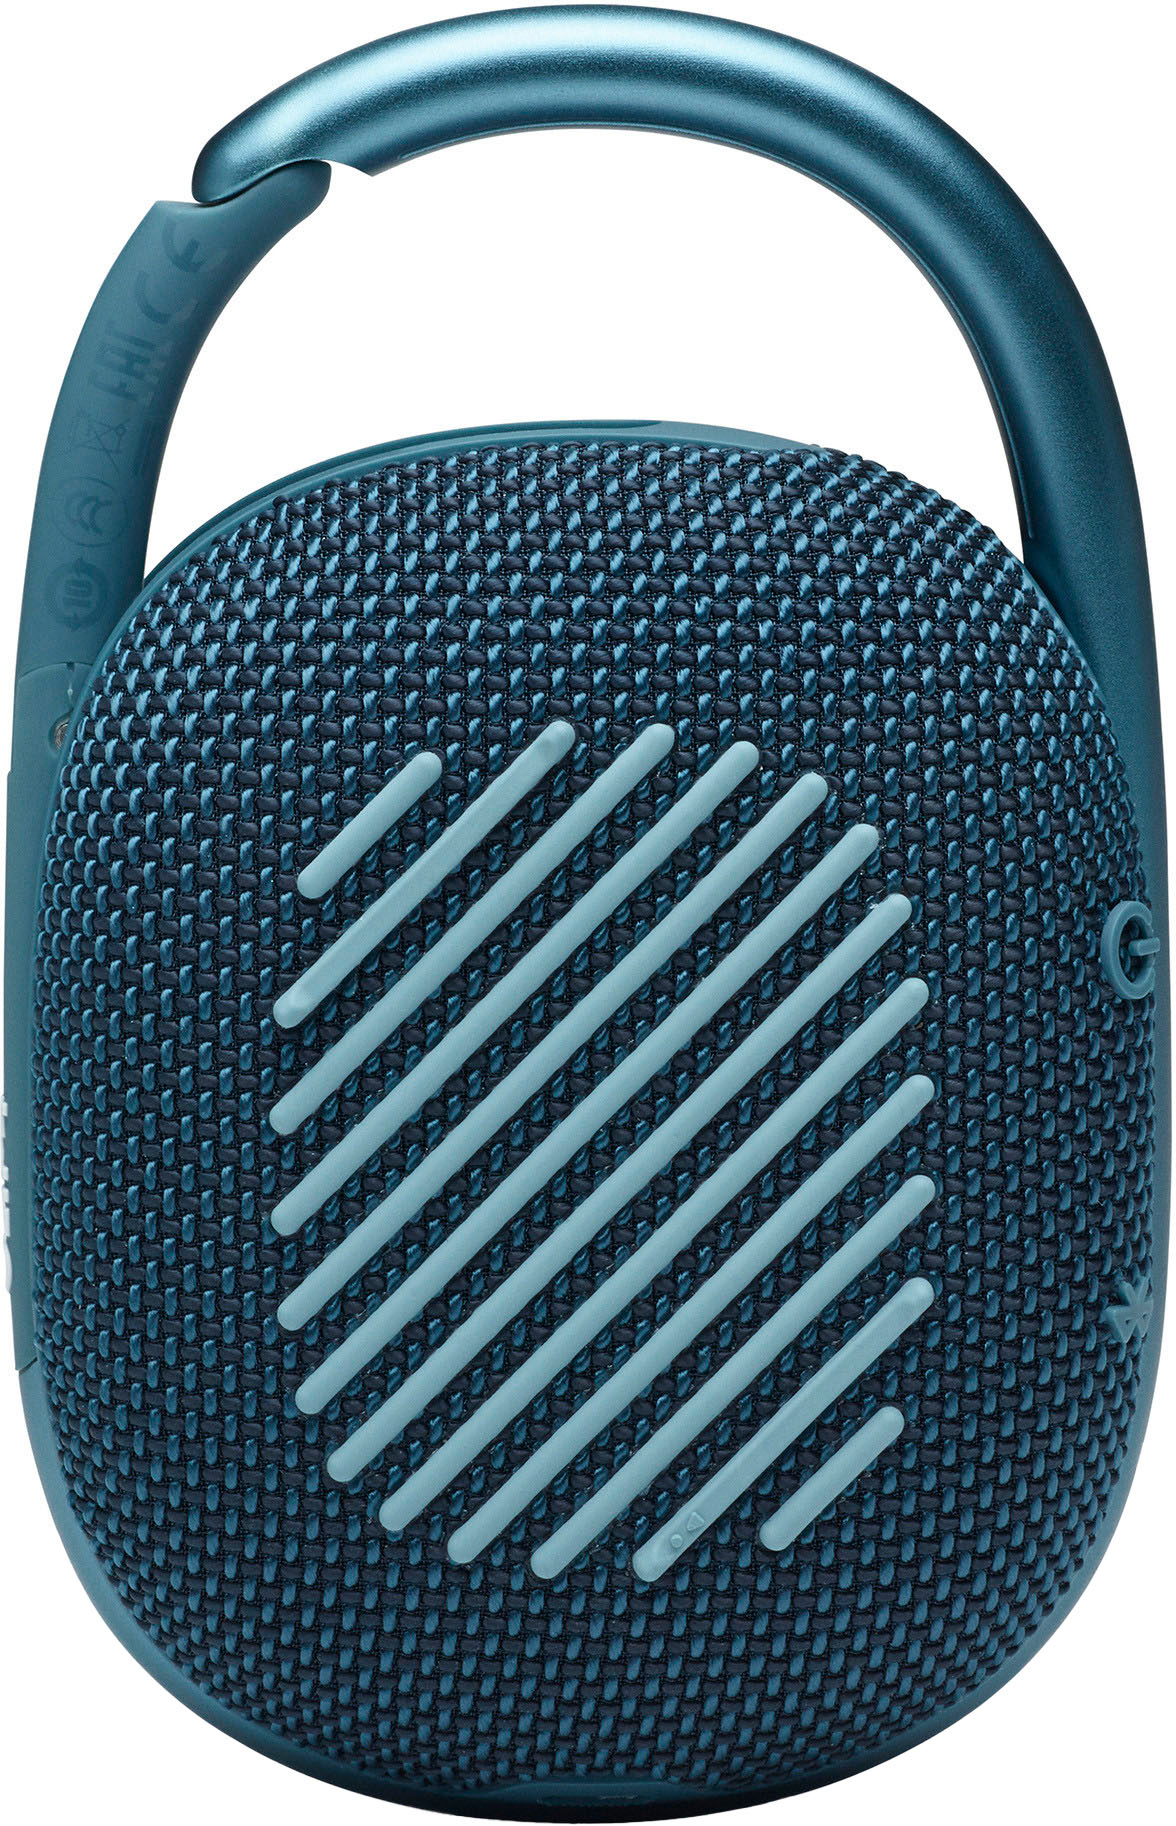 JBL Clip 4 Blue Portable Bluetooth Speaker